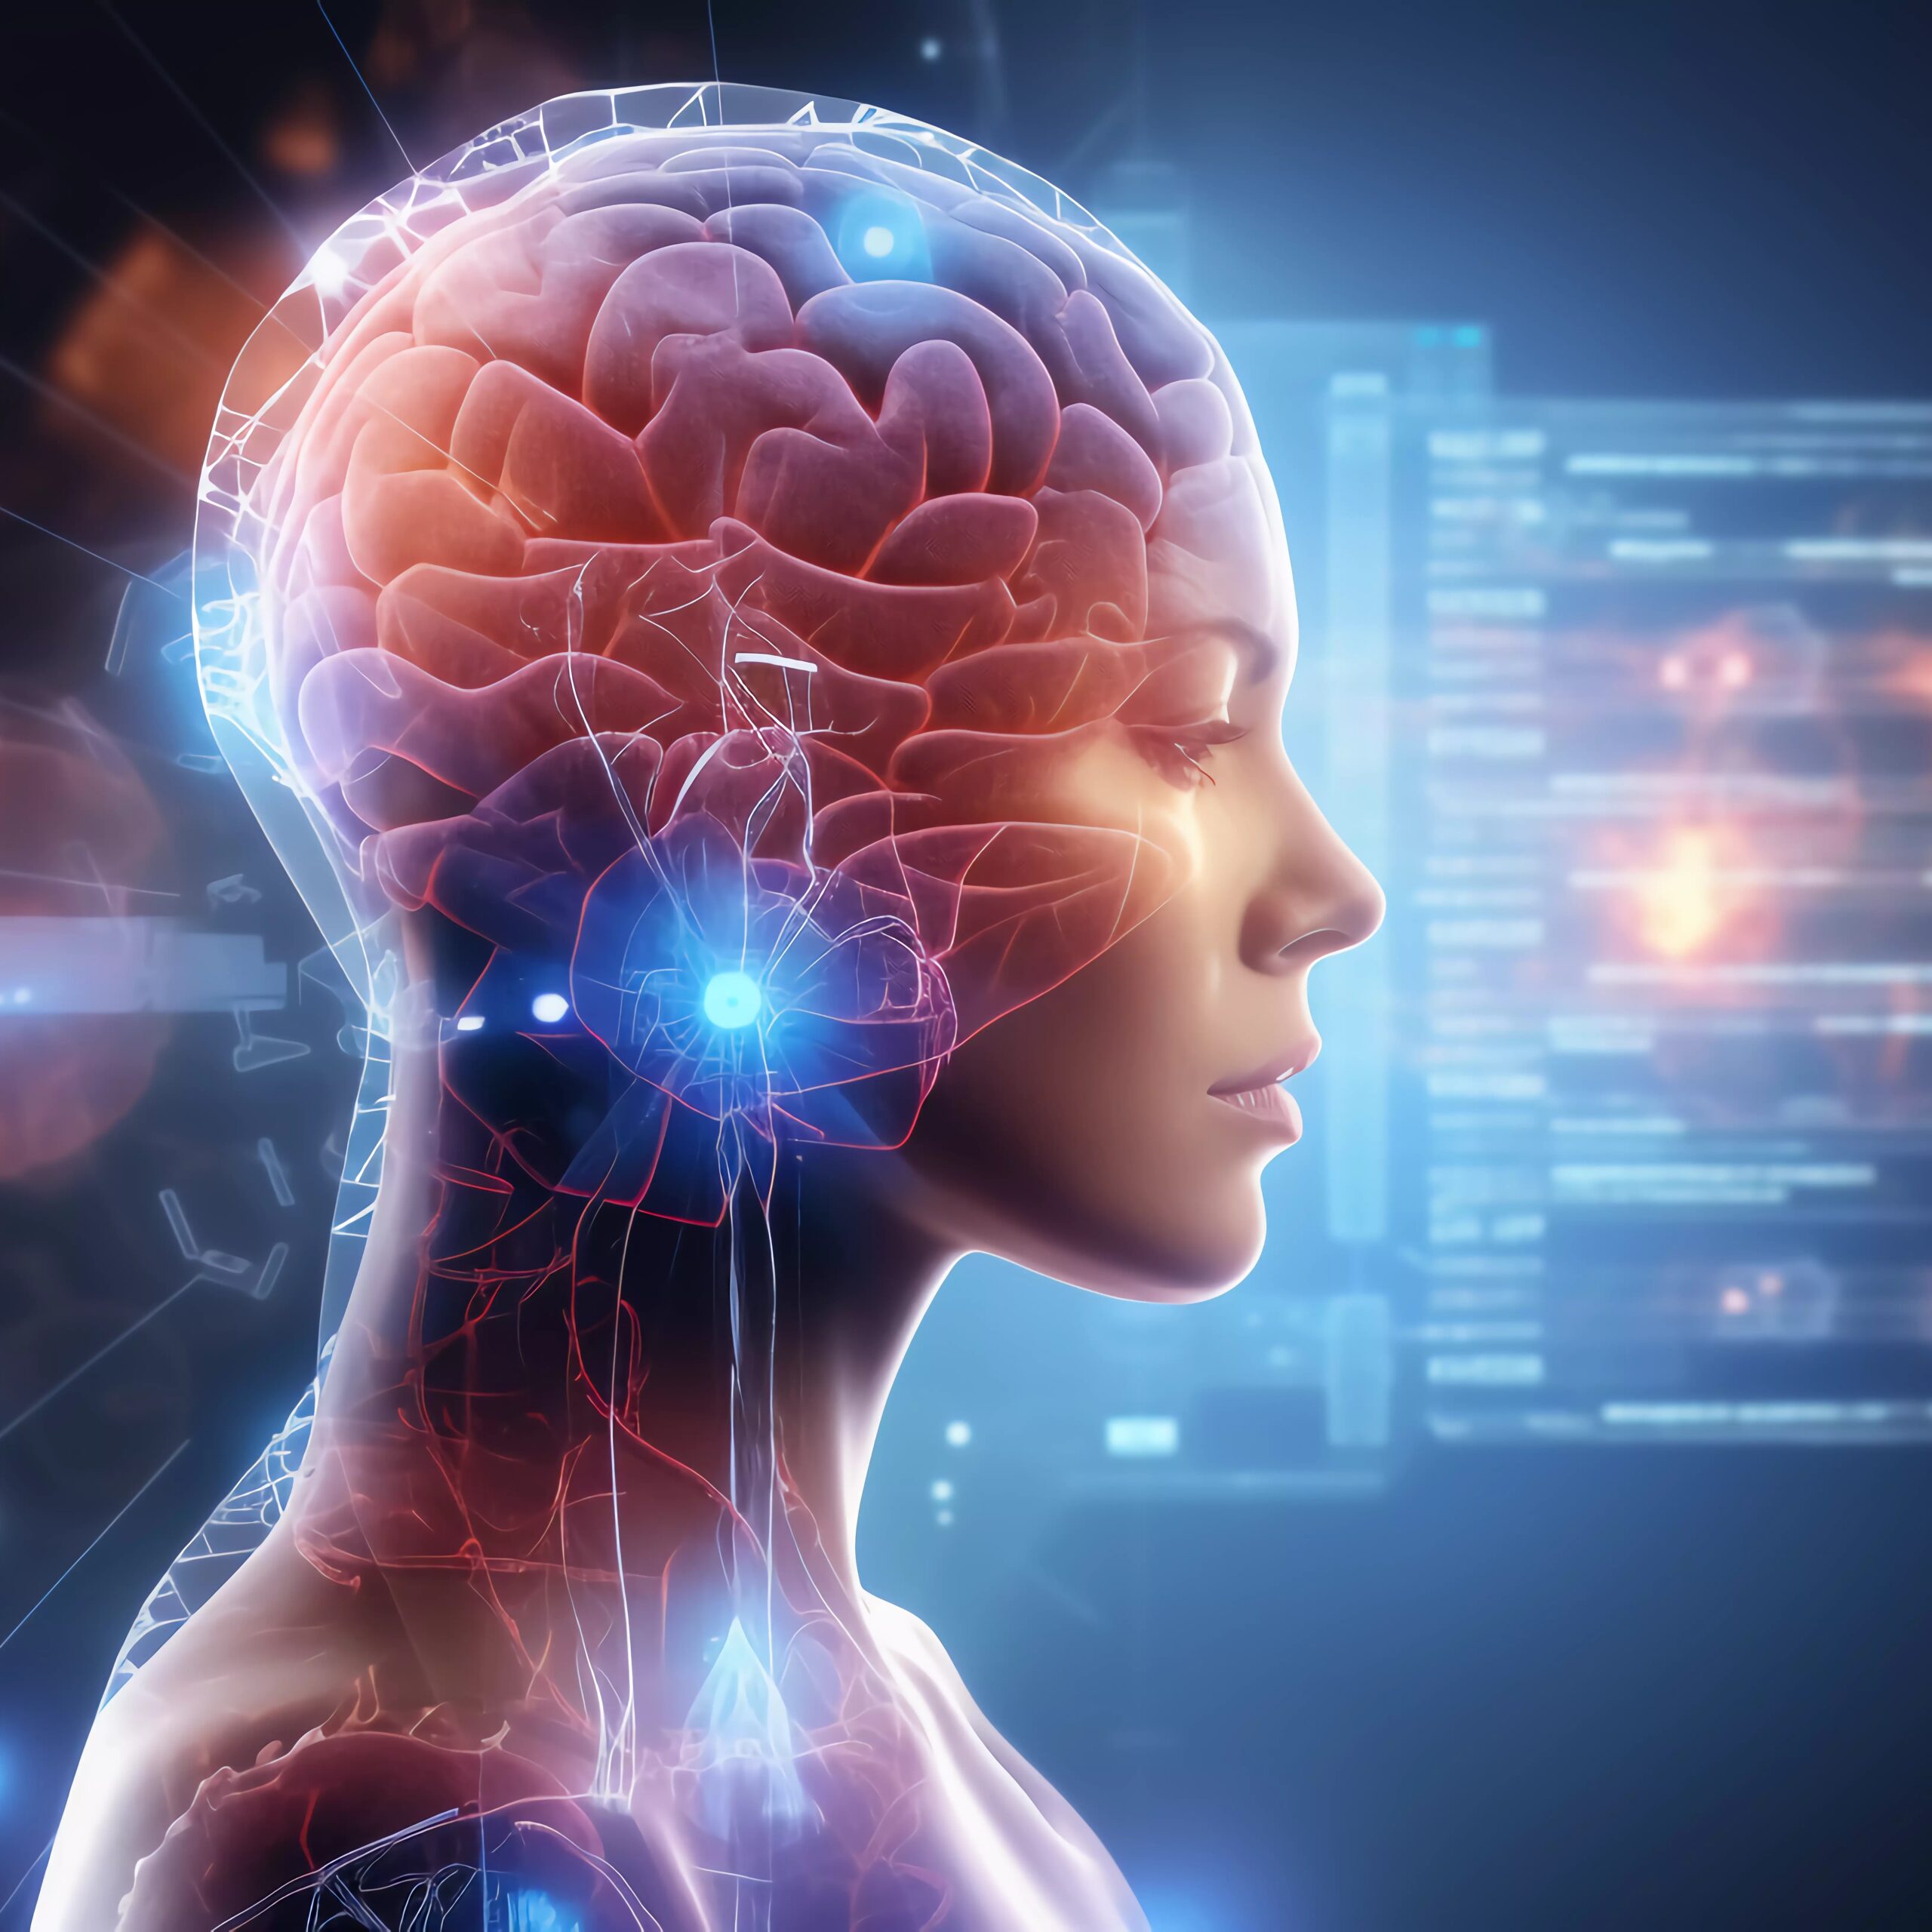 Futuristic semi-transparent diagram of device implanted near brain of woman.